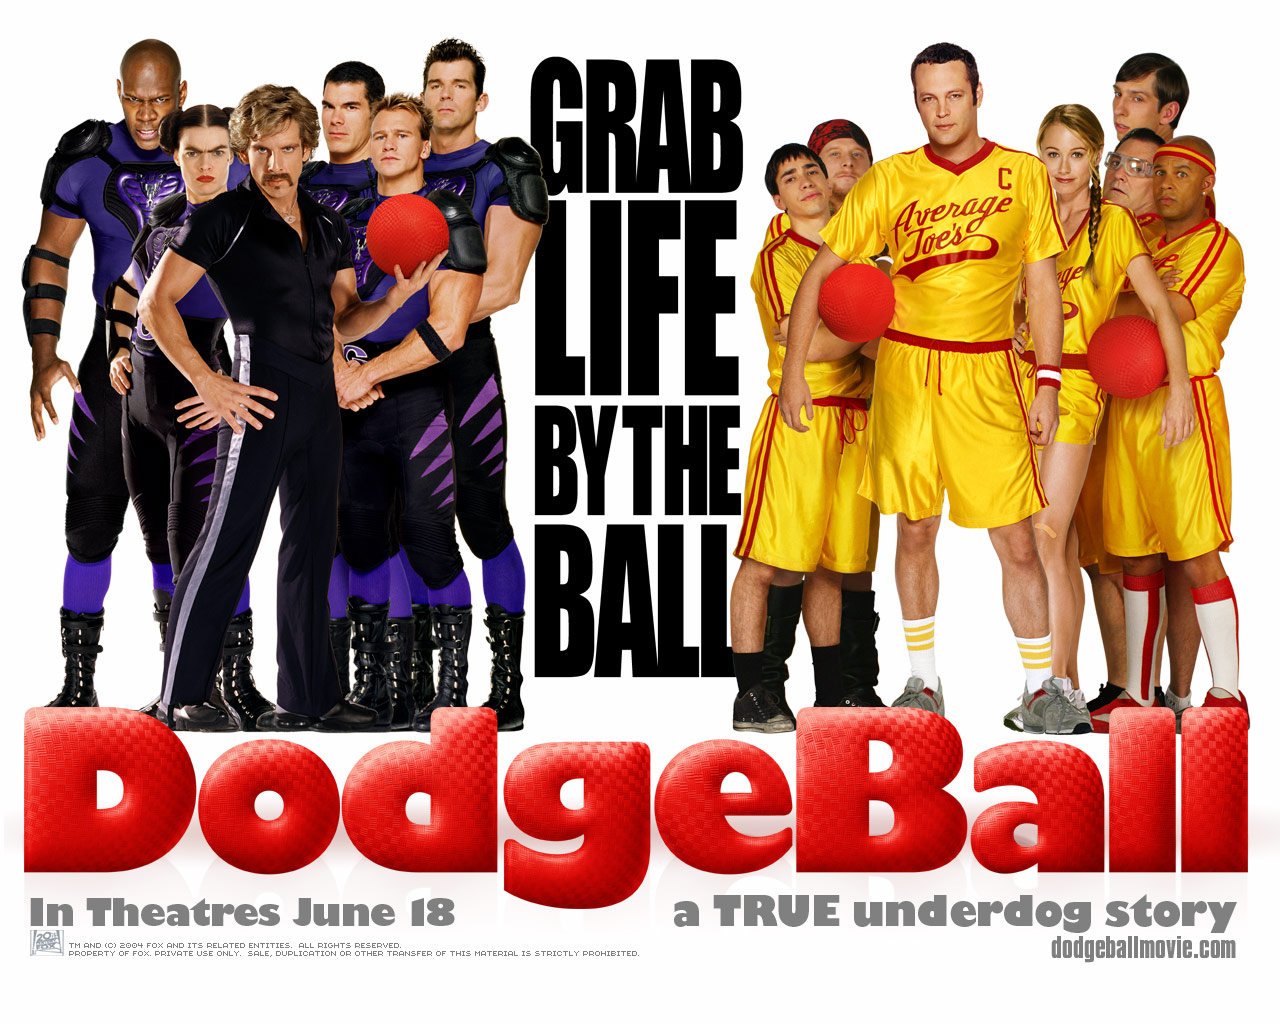 DodgeBall: A True Underdog Story #1